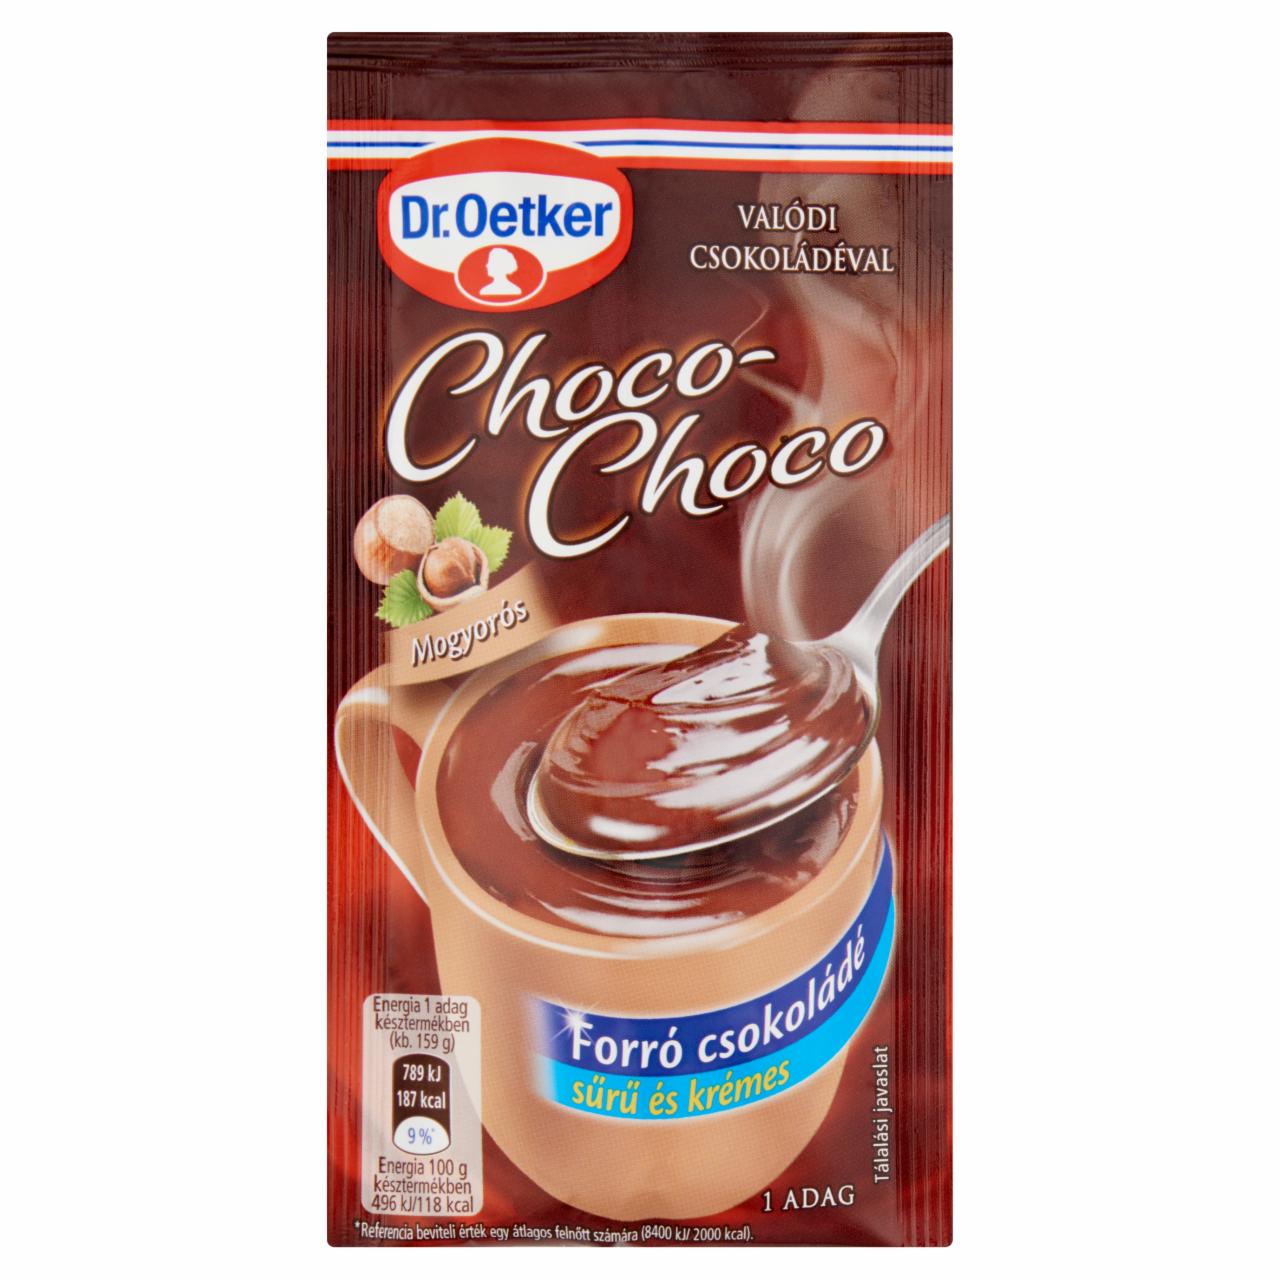 Képek - Dr. Oetker Choco-Choco mogyorós forró csokoládé italpor 34 g